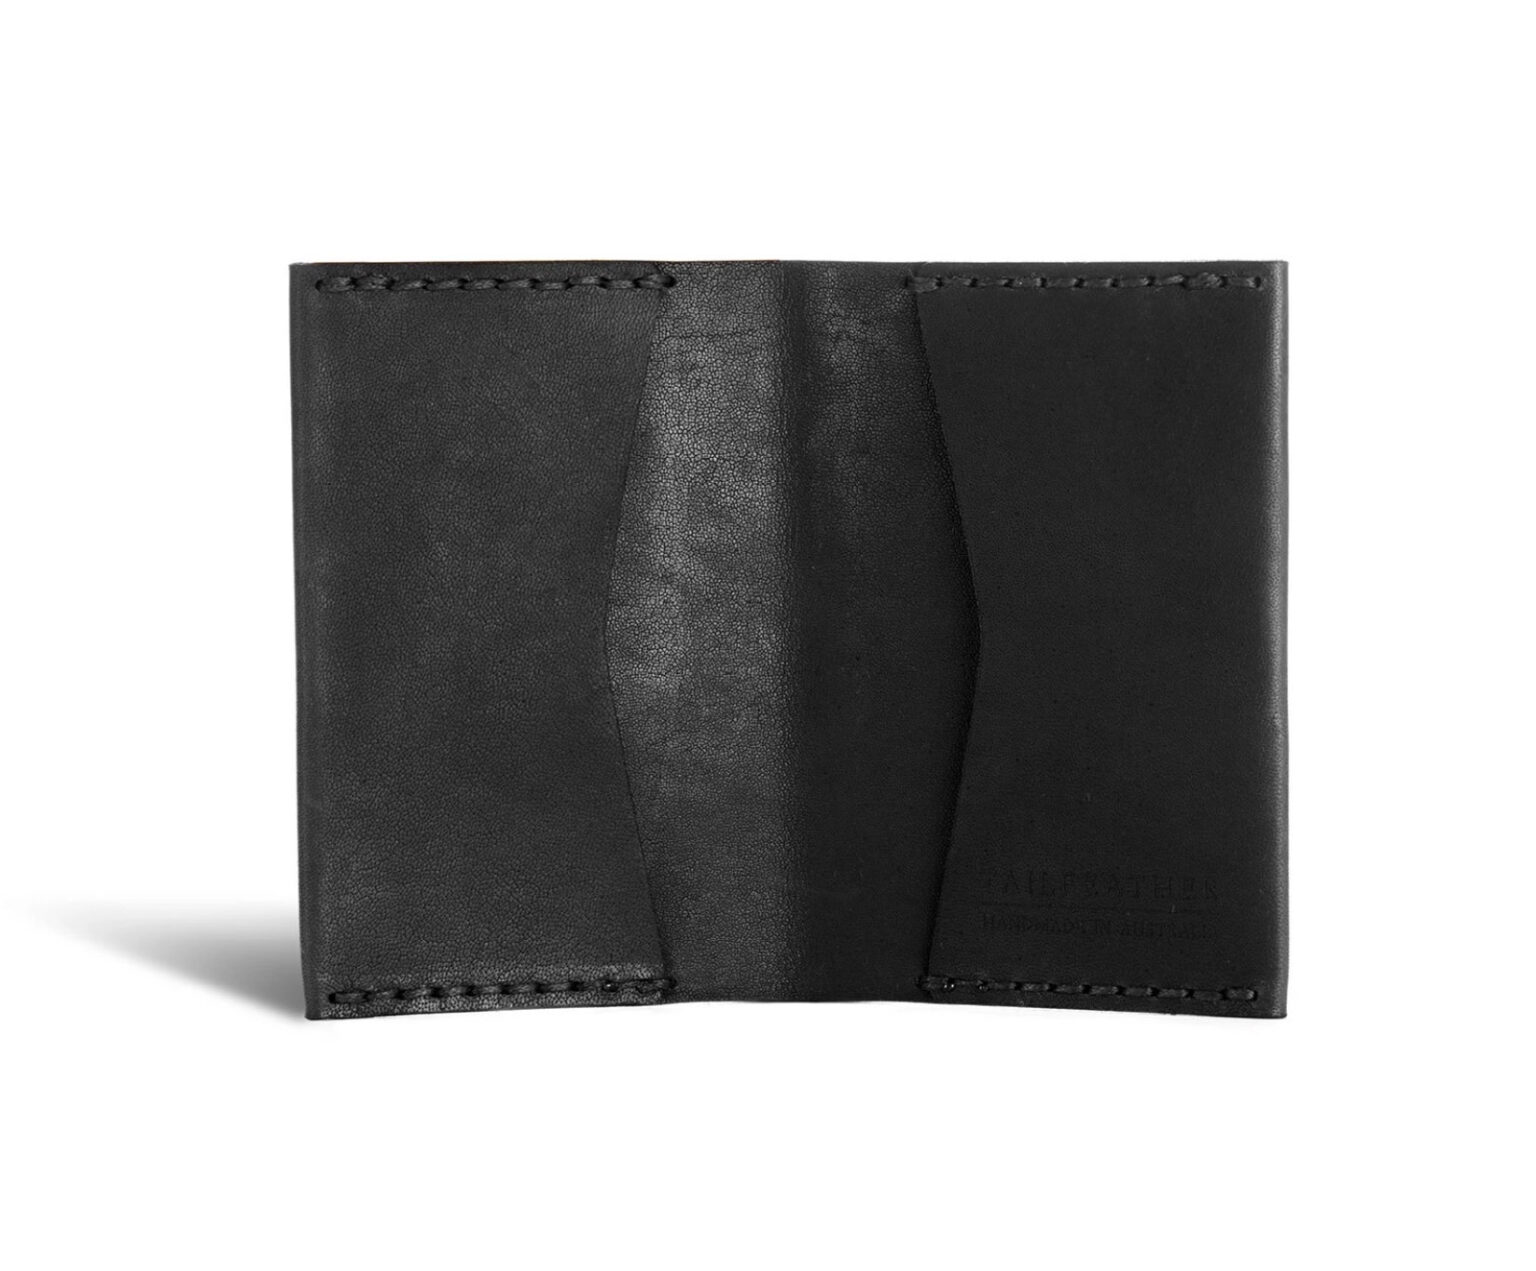 Sparrow V2 – A Minimalist Kangaroo Leather Wallet From Australia